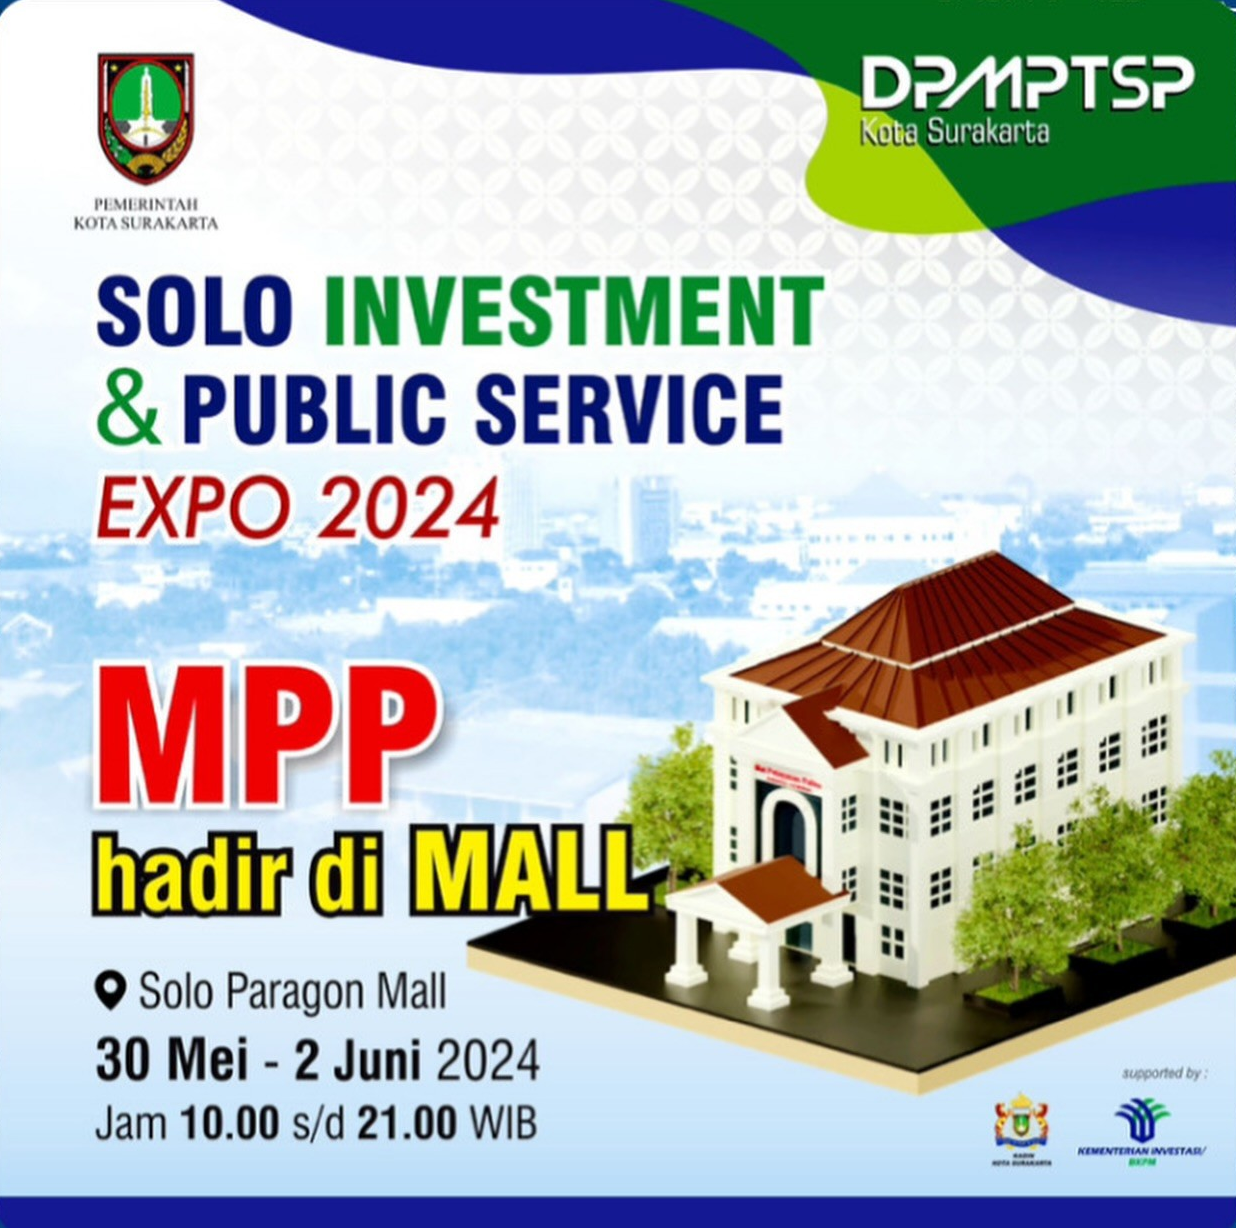 Solo Investment & Public Service Expo 2024